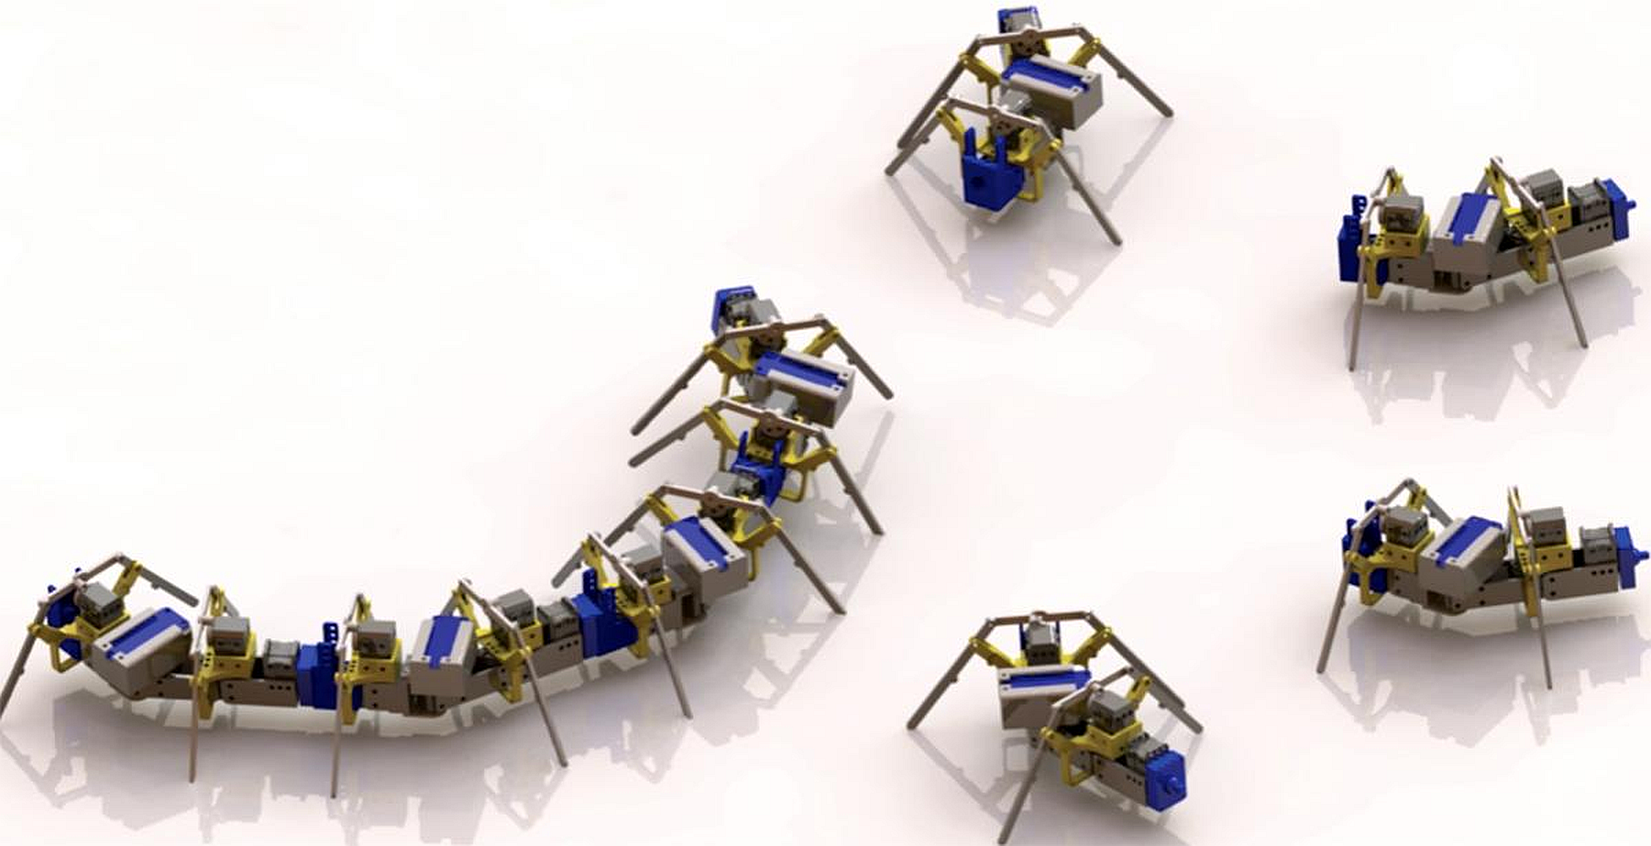 Linking robots to navigate difficult terrain